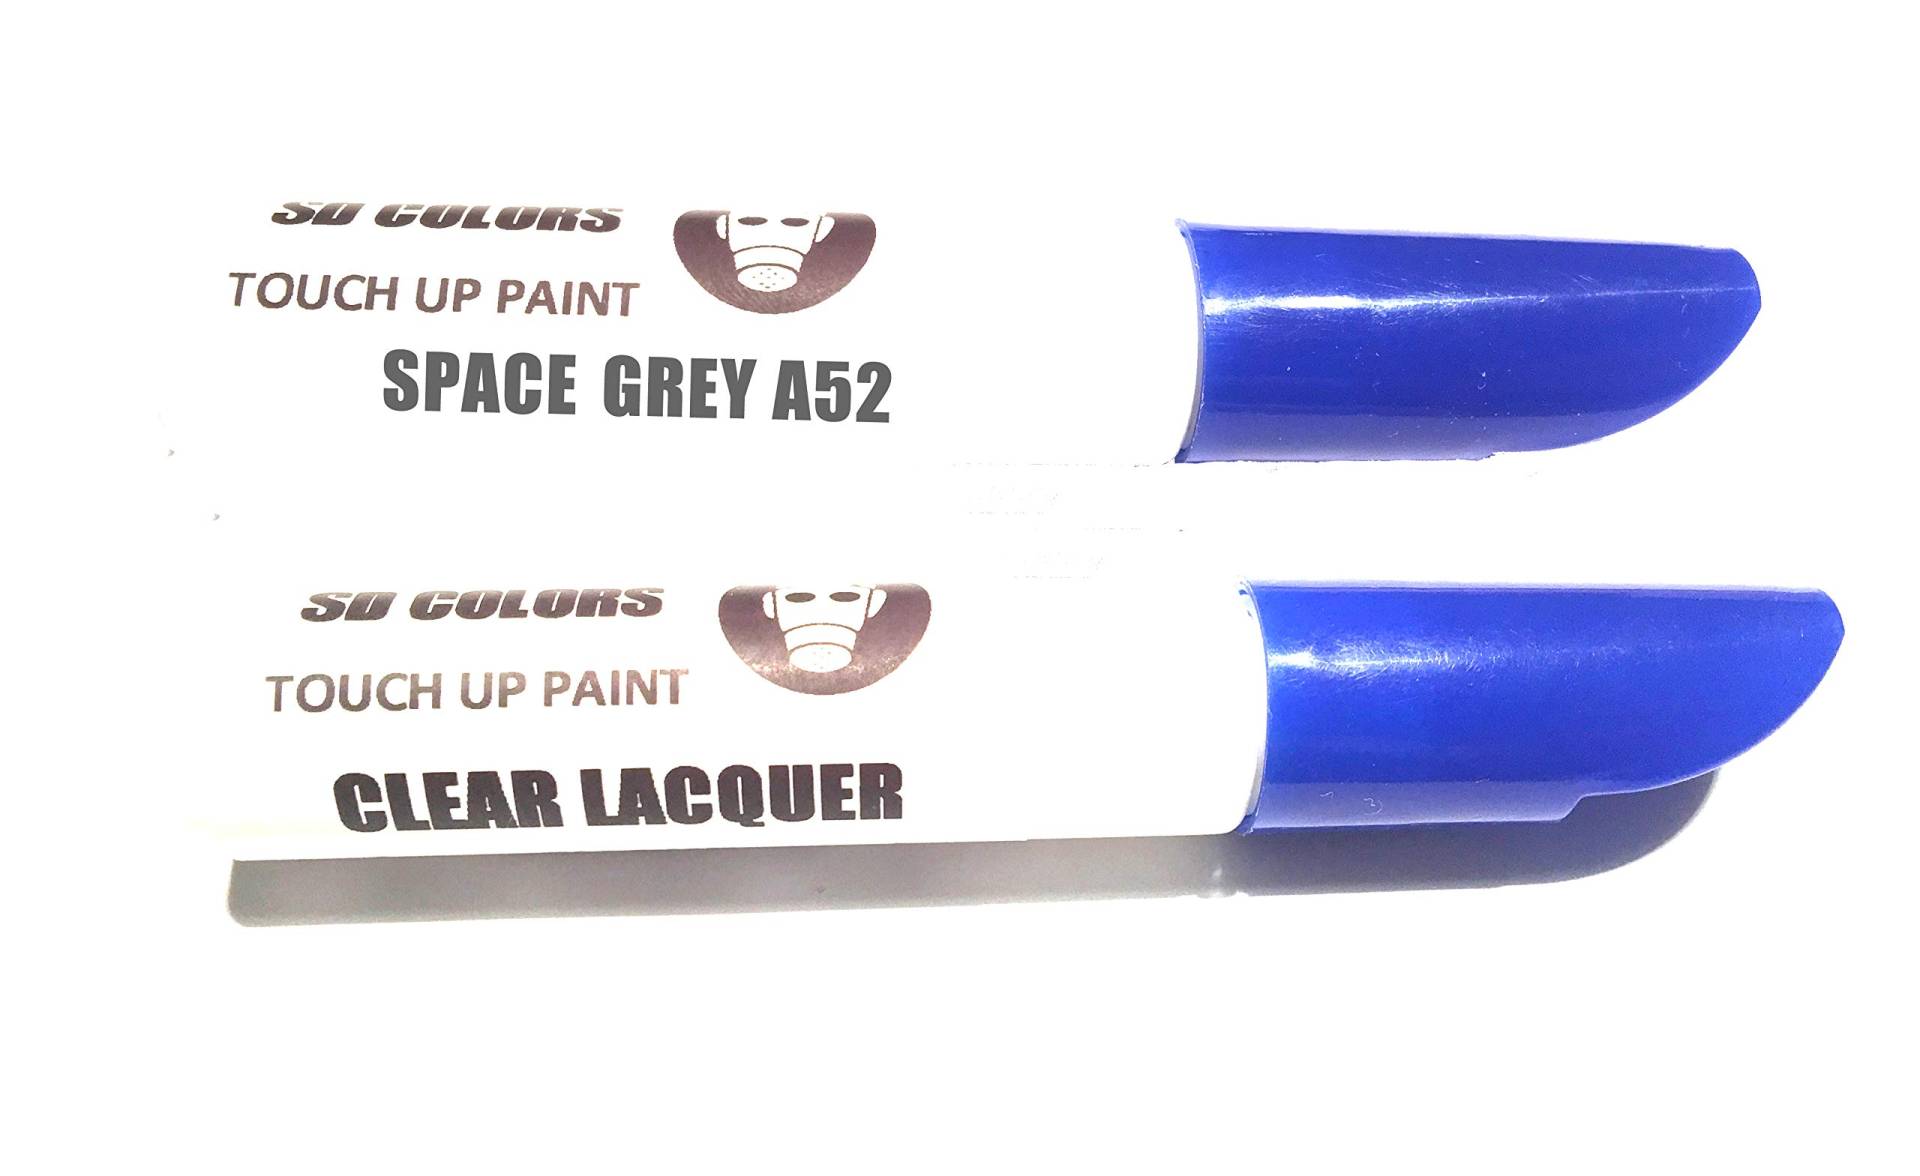 SD COLORS Space Grey A52 Lackstift-Reparatur-Set, 12 ml, Pinsel mit Kratzabsplittern, Farbcode A52 Space Grey (Lack + Lack) von SD COLORS